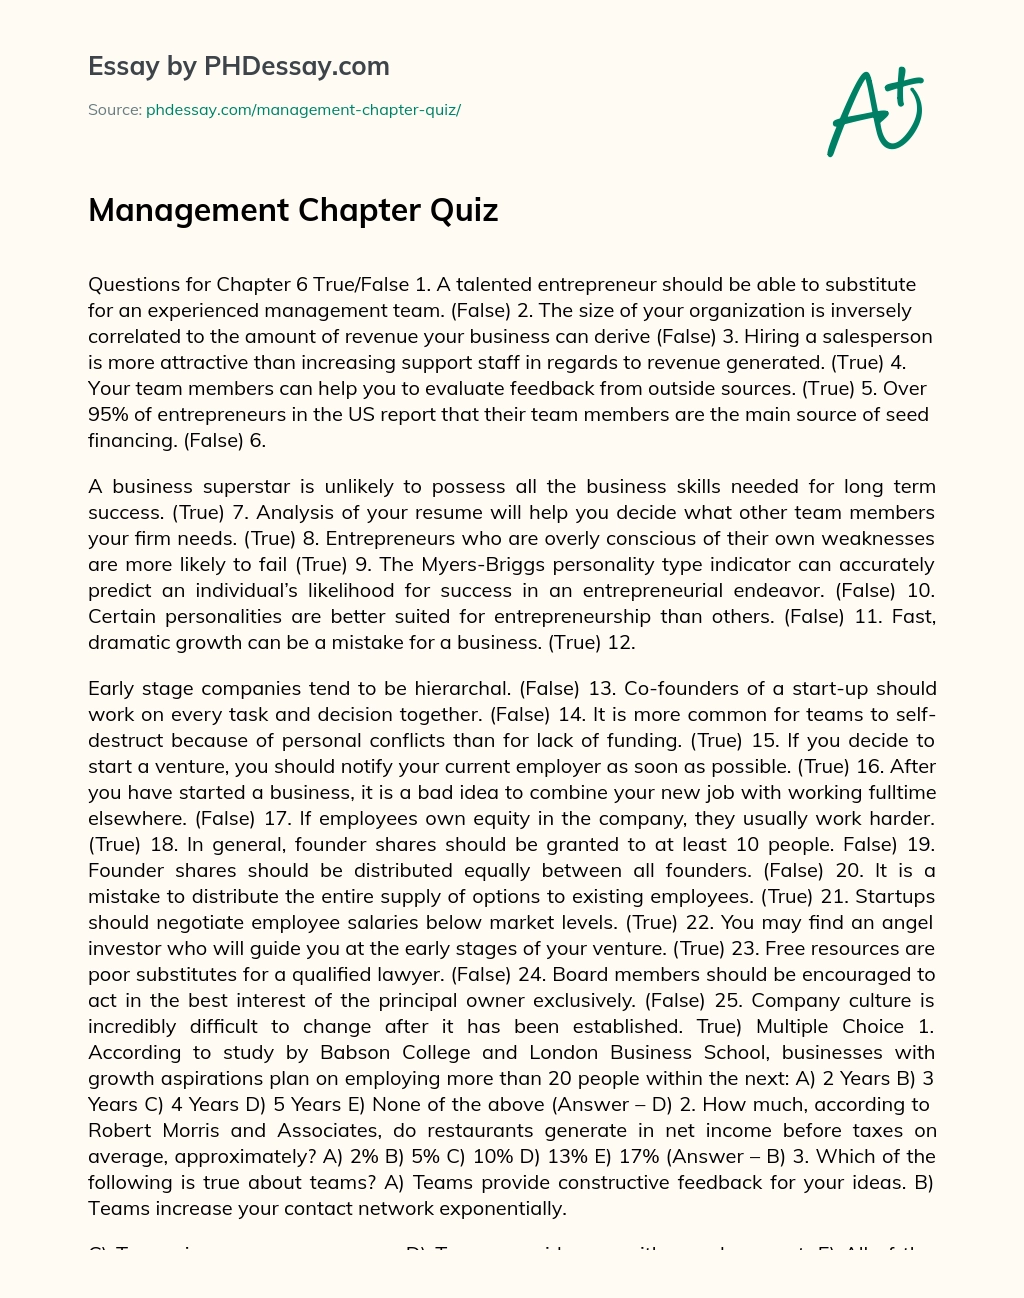 Management Chapter Quiz essay